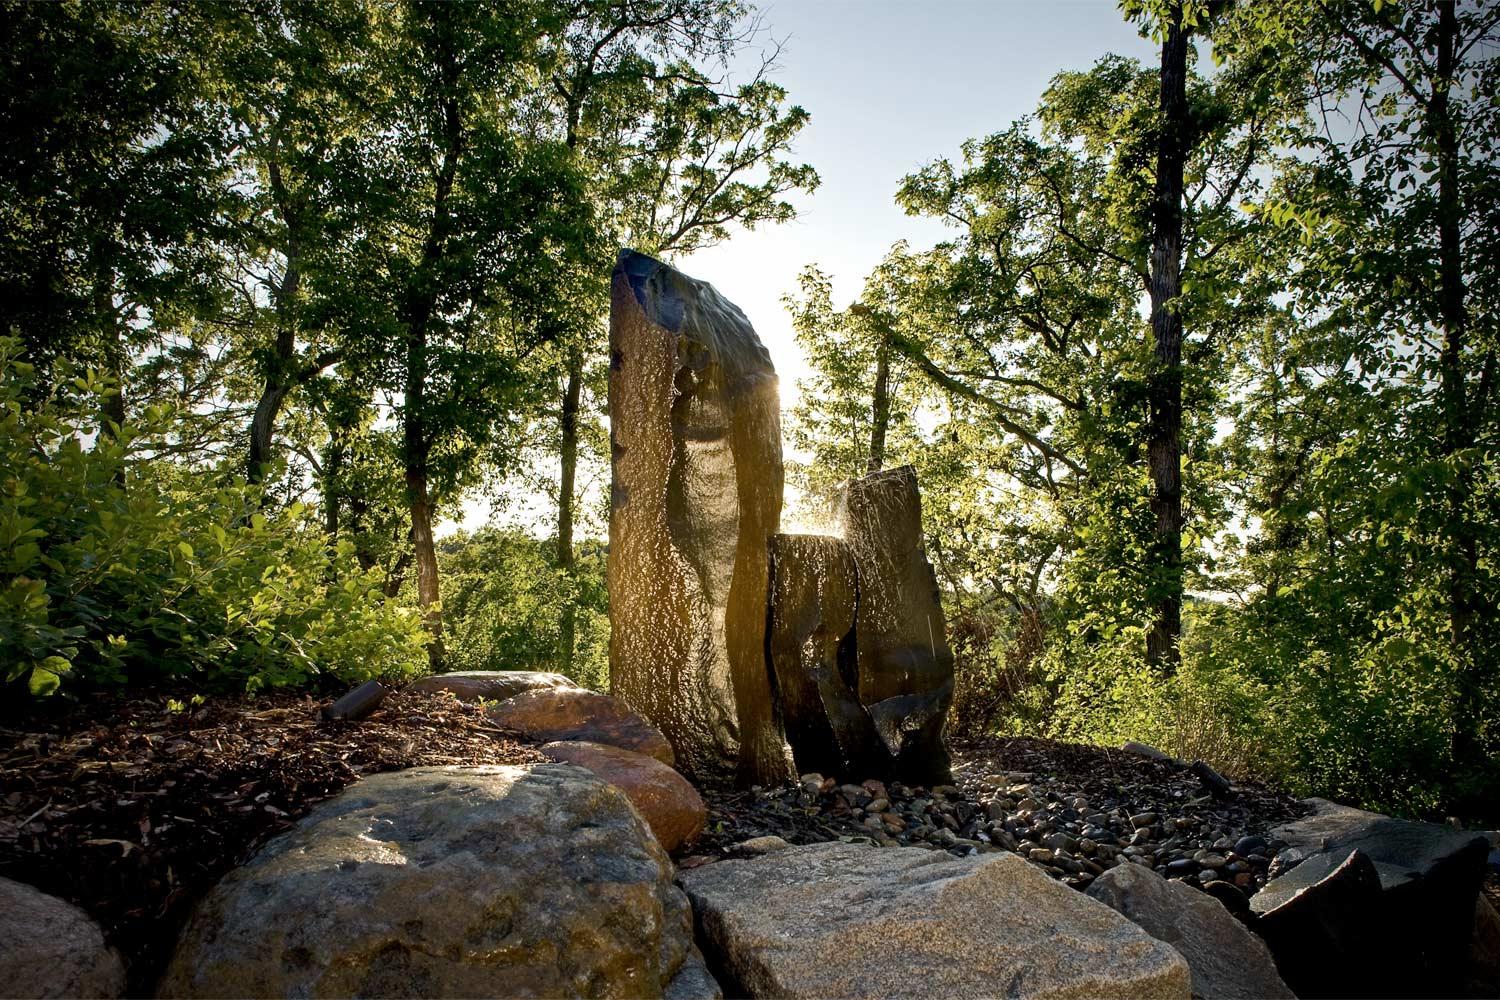 Three stone pillars make an organic, natural water feature